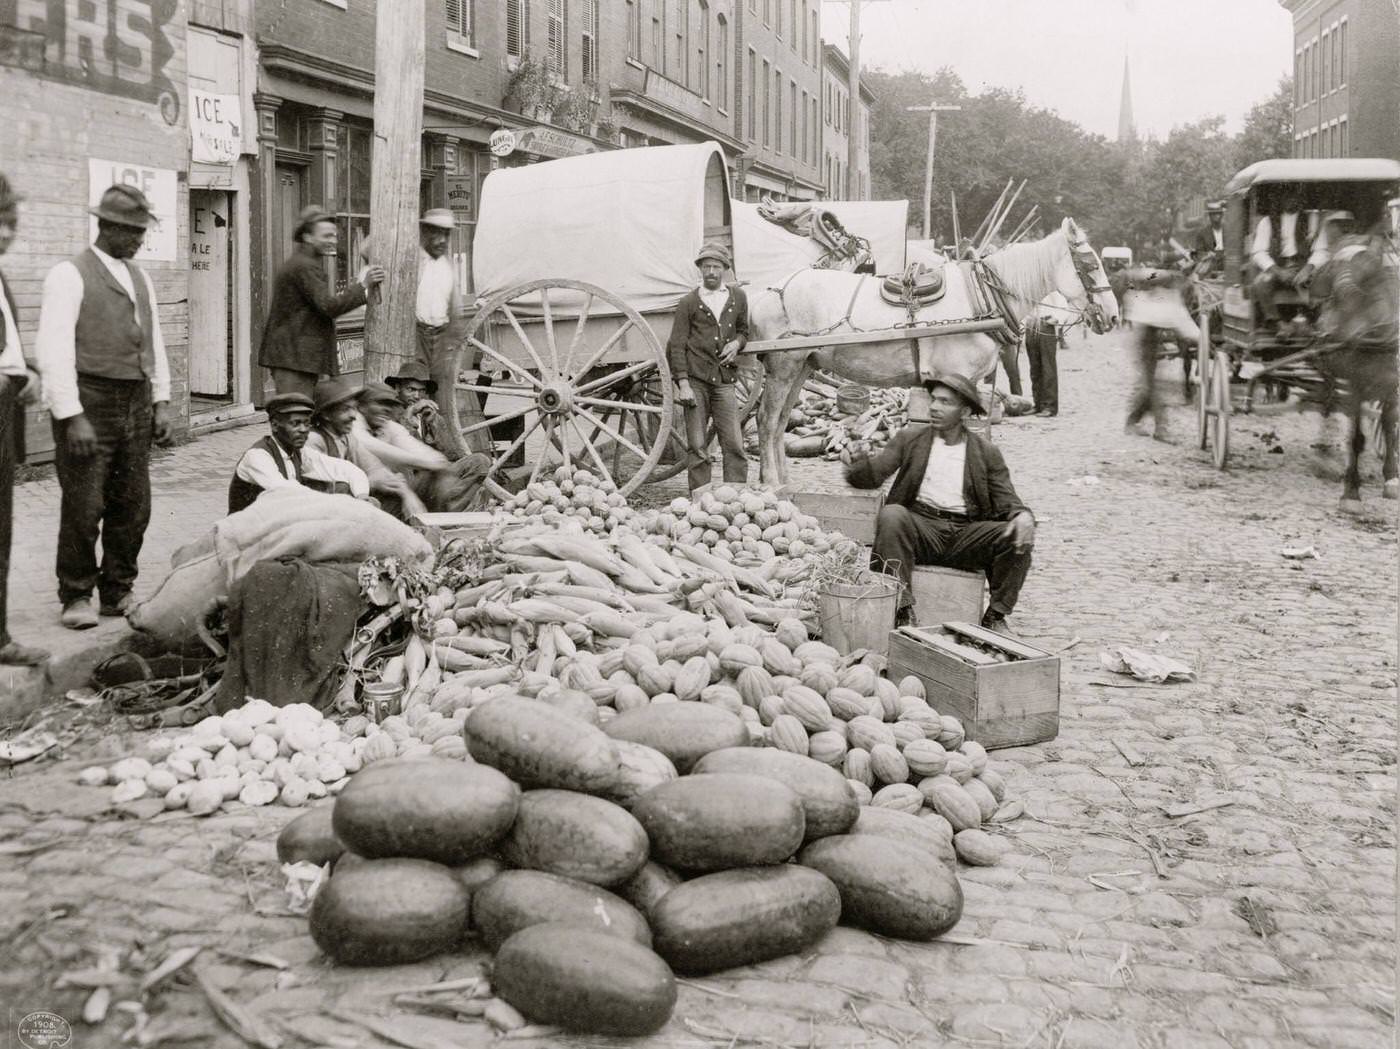 Sixth Street market, Richmond, Va African-American vendors and farm produce--melons, corn and squash, 1908